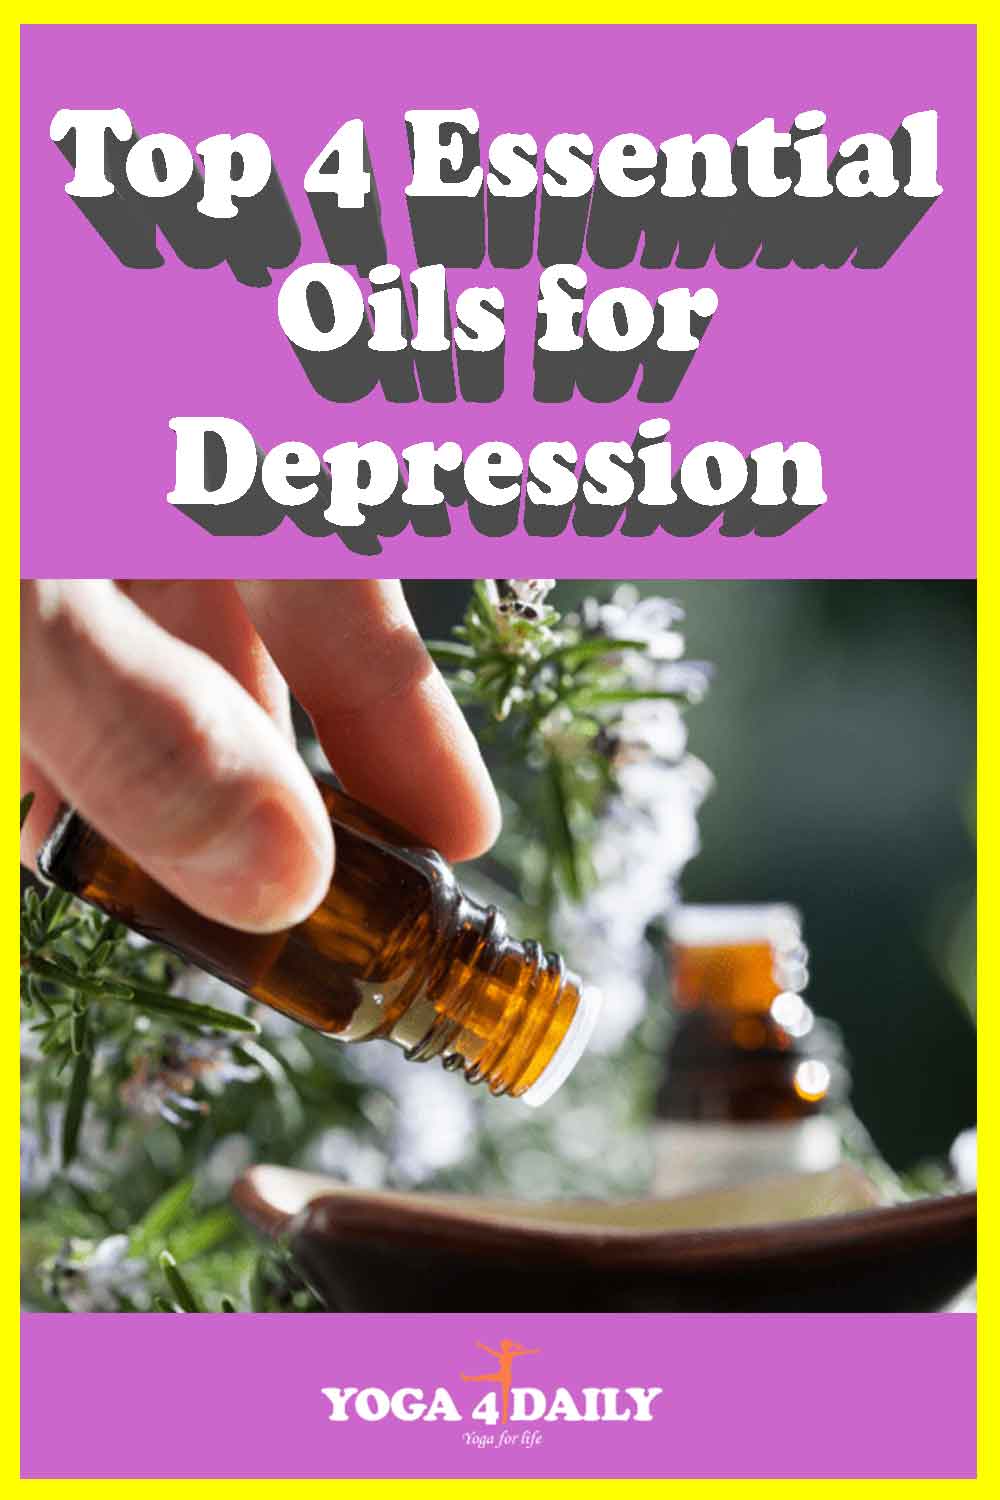 Top 4 Essential Oils for Depression